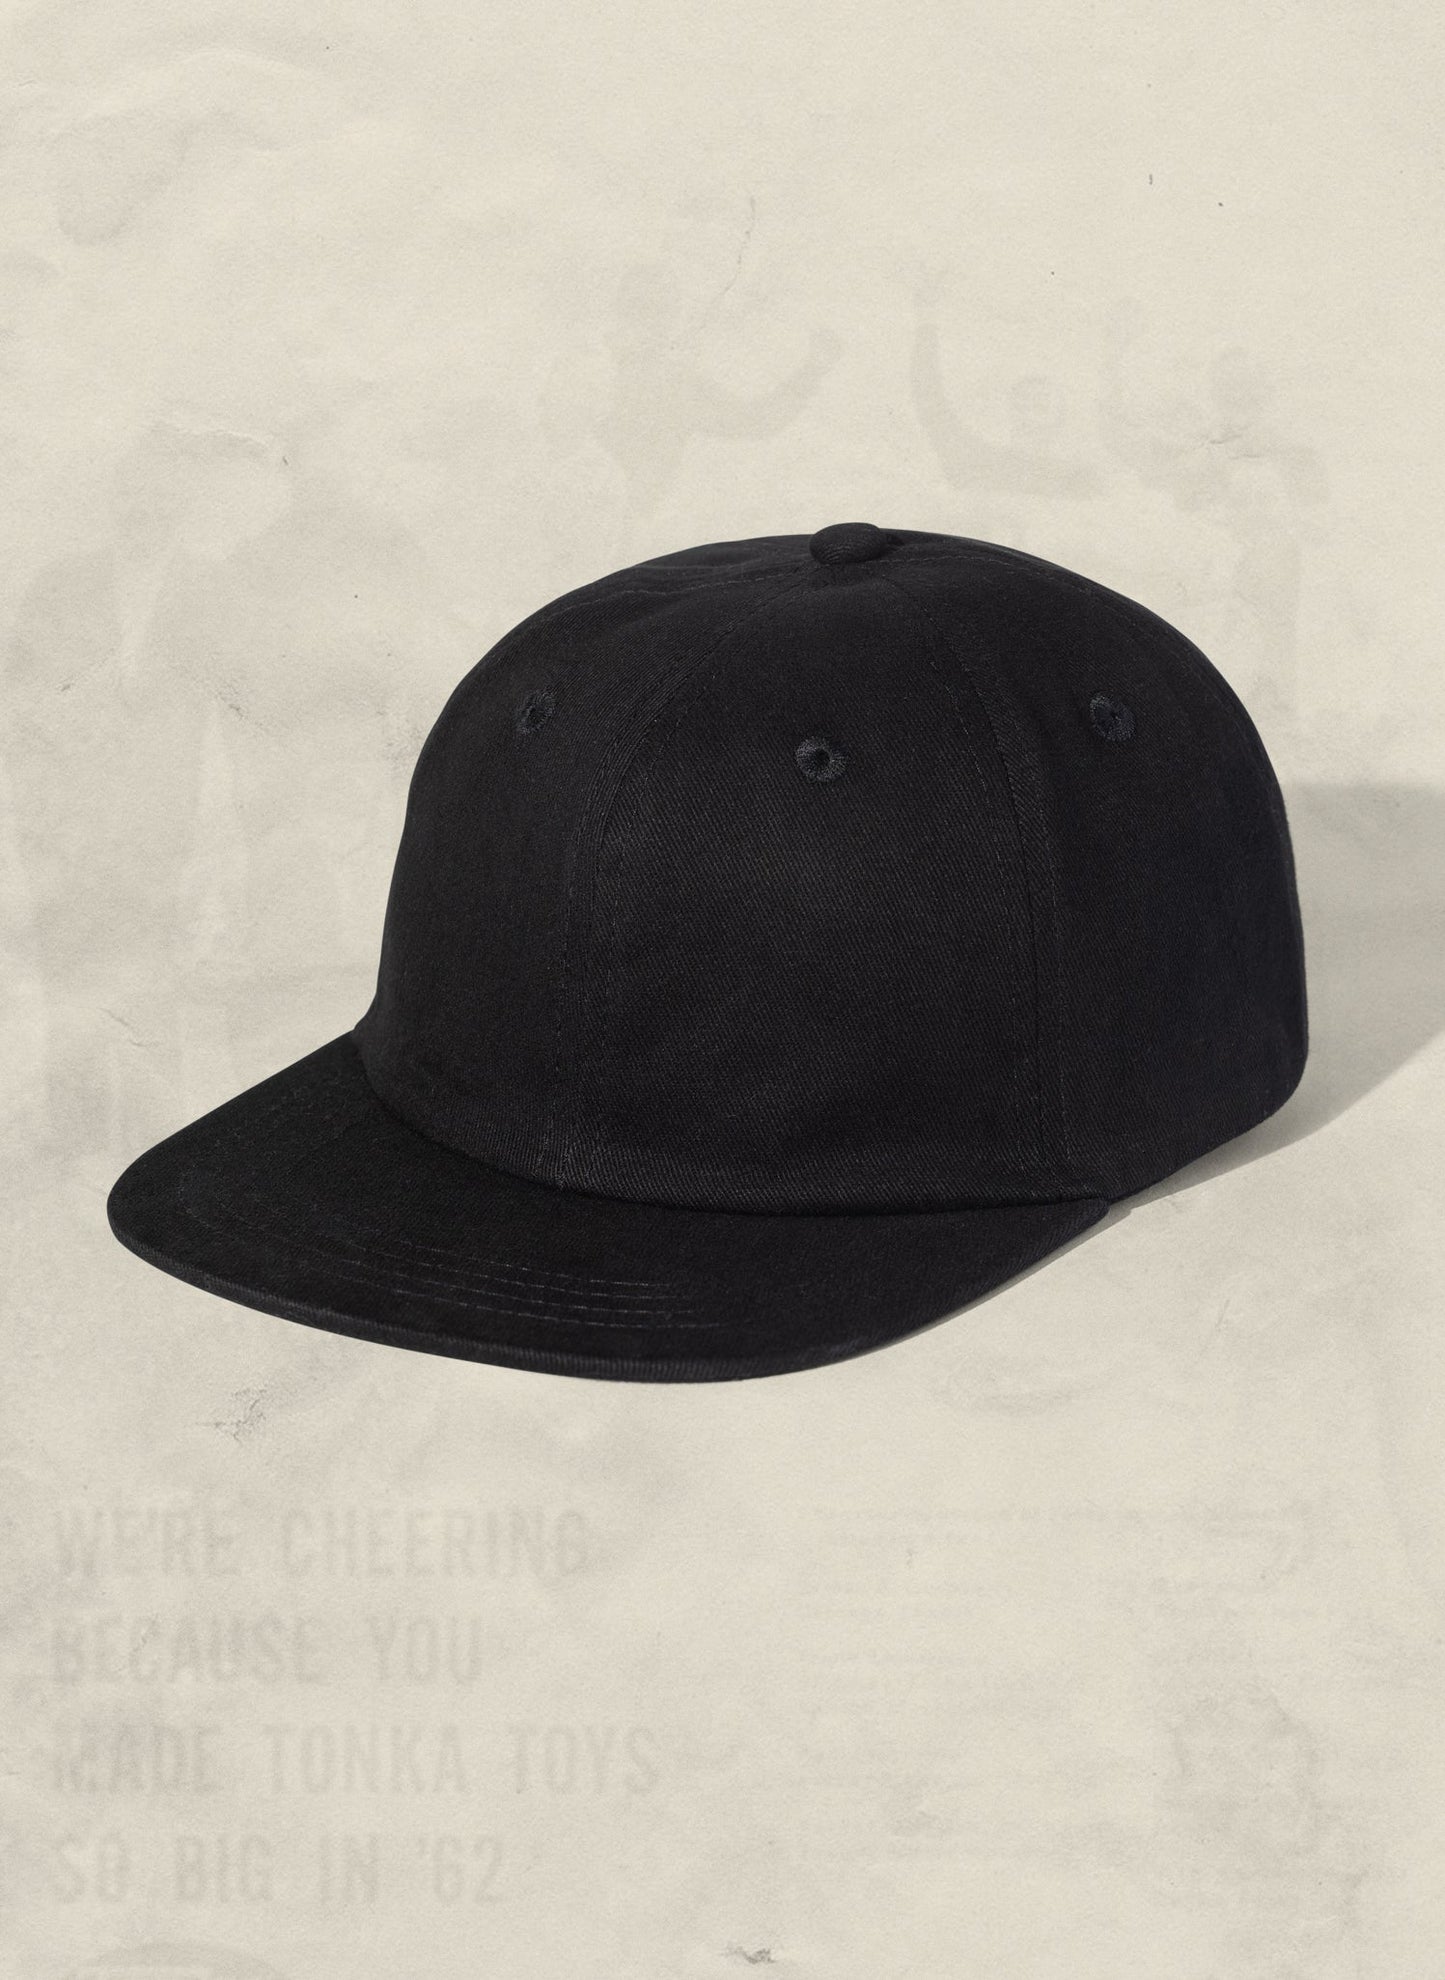 Weld Mfg Brushed Cotton Twill Kids Unstructured 6 Panel Vintage Inspired Baseball Strapback Hat - Laid Back Childrens Headwear - Black